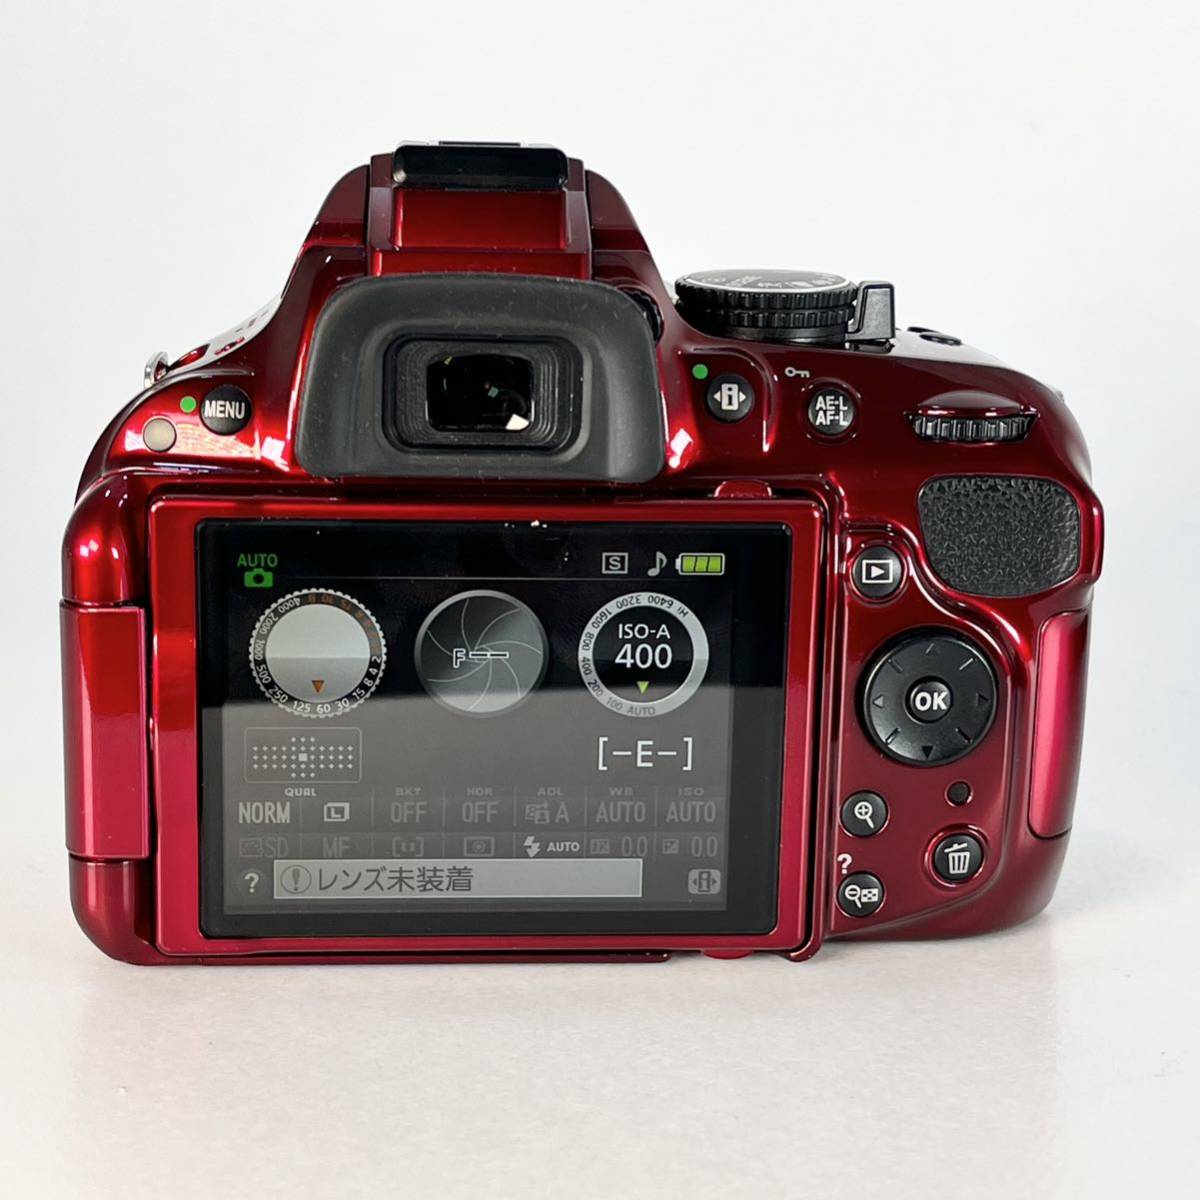 【Nikon】デジタル一眼レフカメラ D5200 レンズキット AF-S DX NIKKOR 18-55mm f/3.5-5.6G VR付属 レッド D5200LKRD_画像8